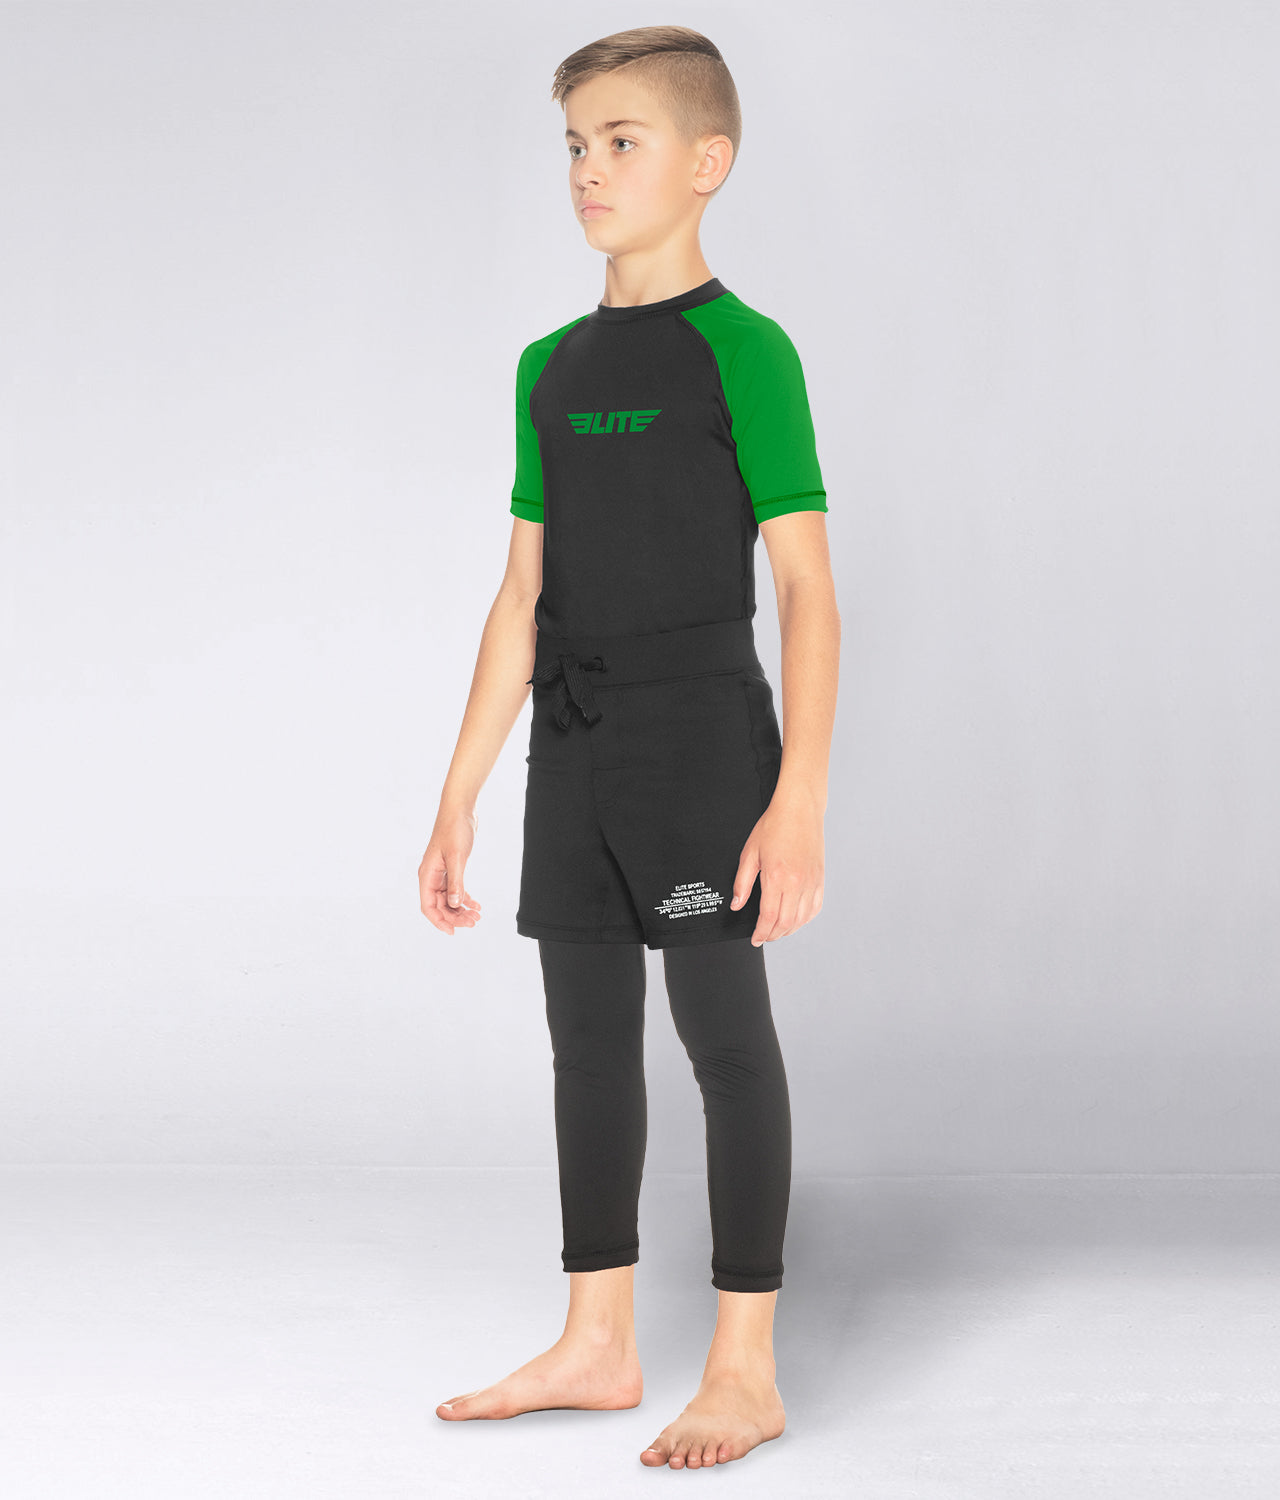 Elite Sports Kids' Standard Green Short Sleeve BJJ Rash Guard